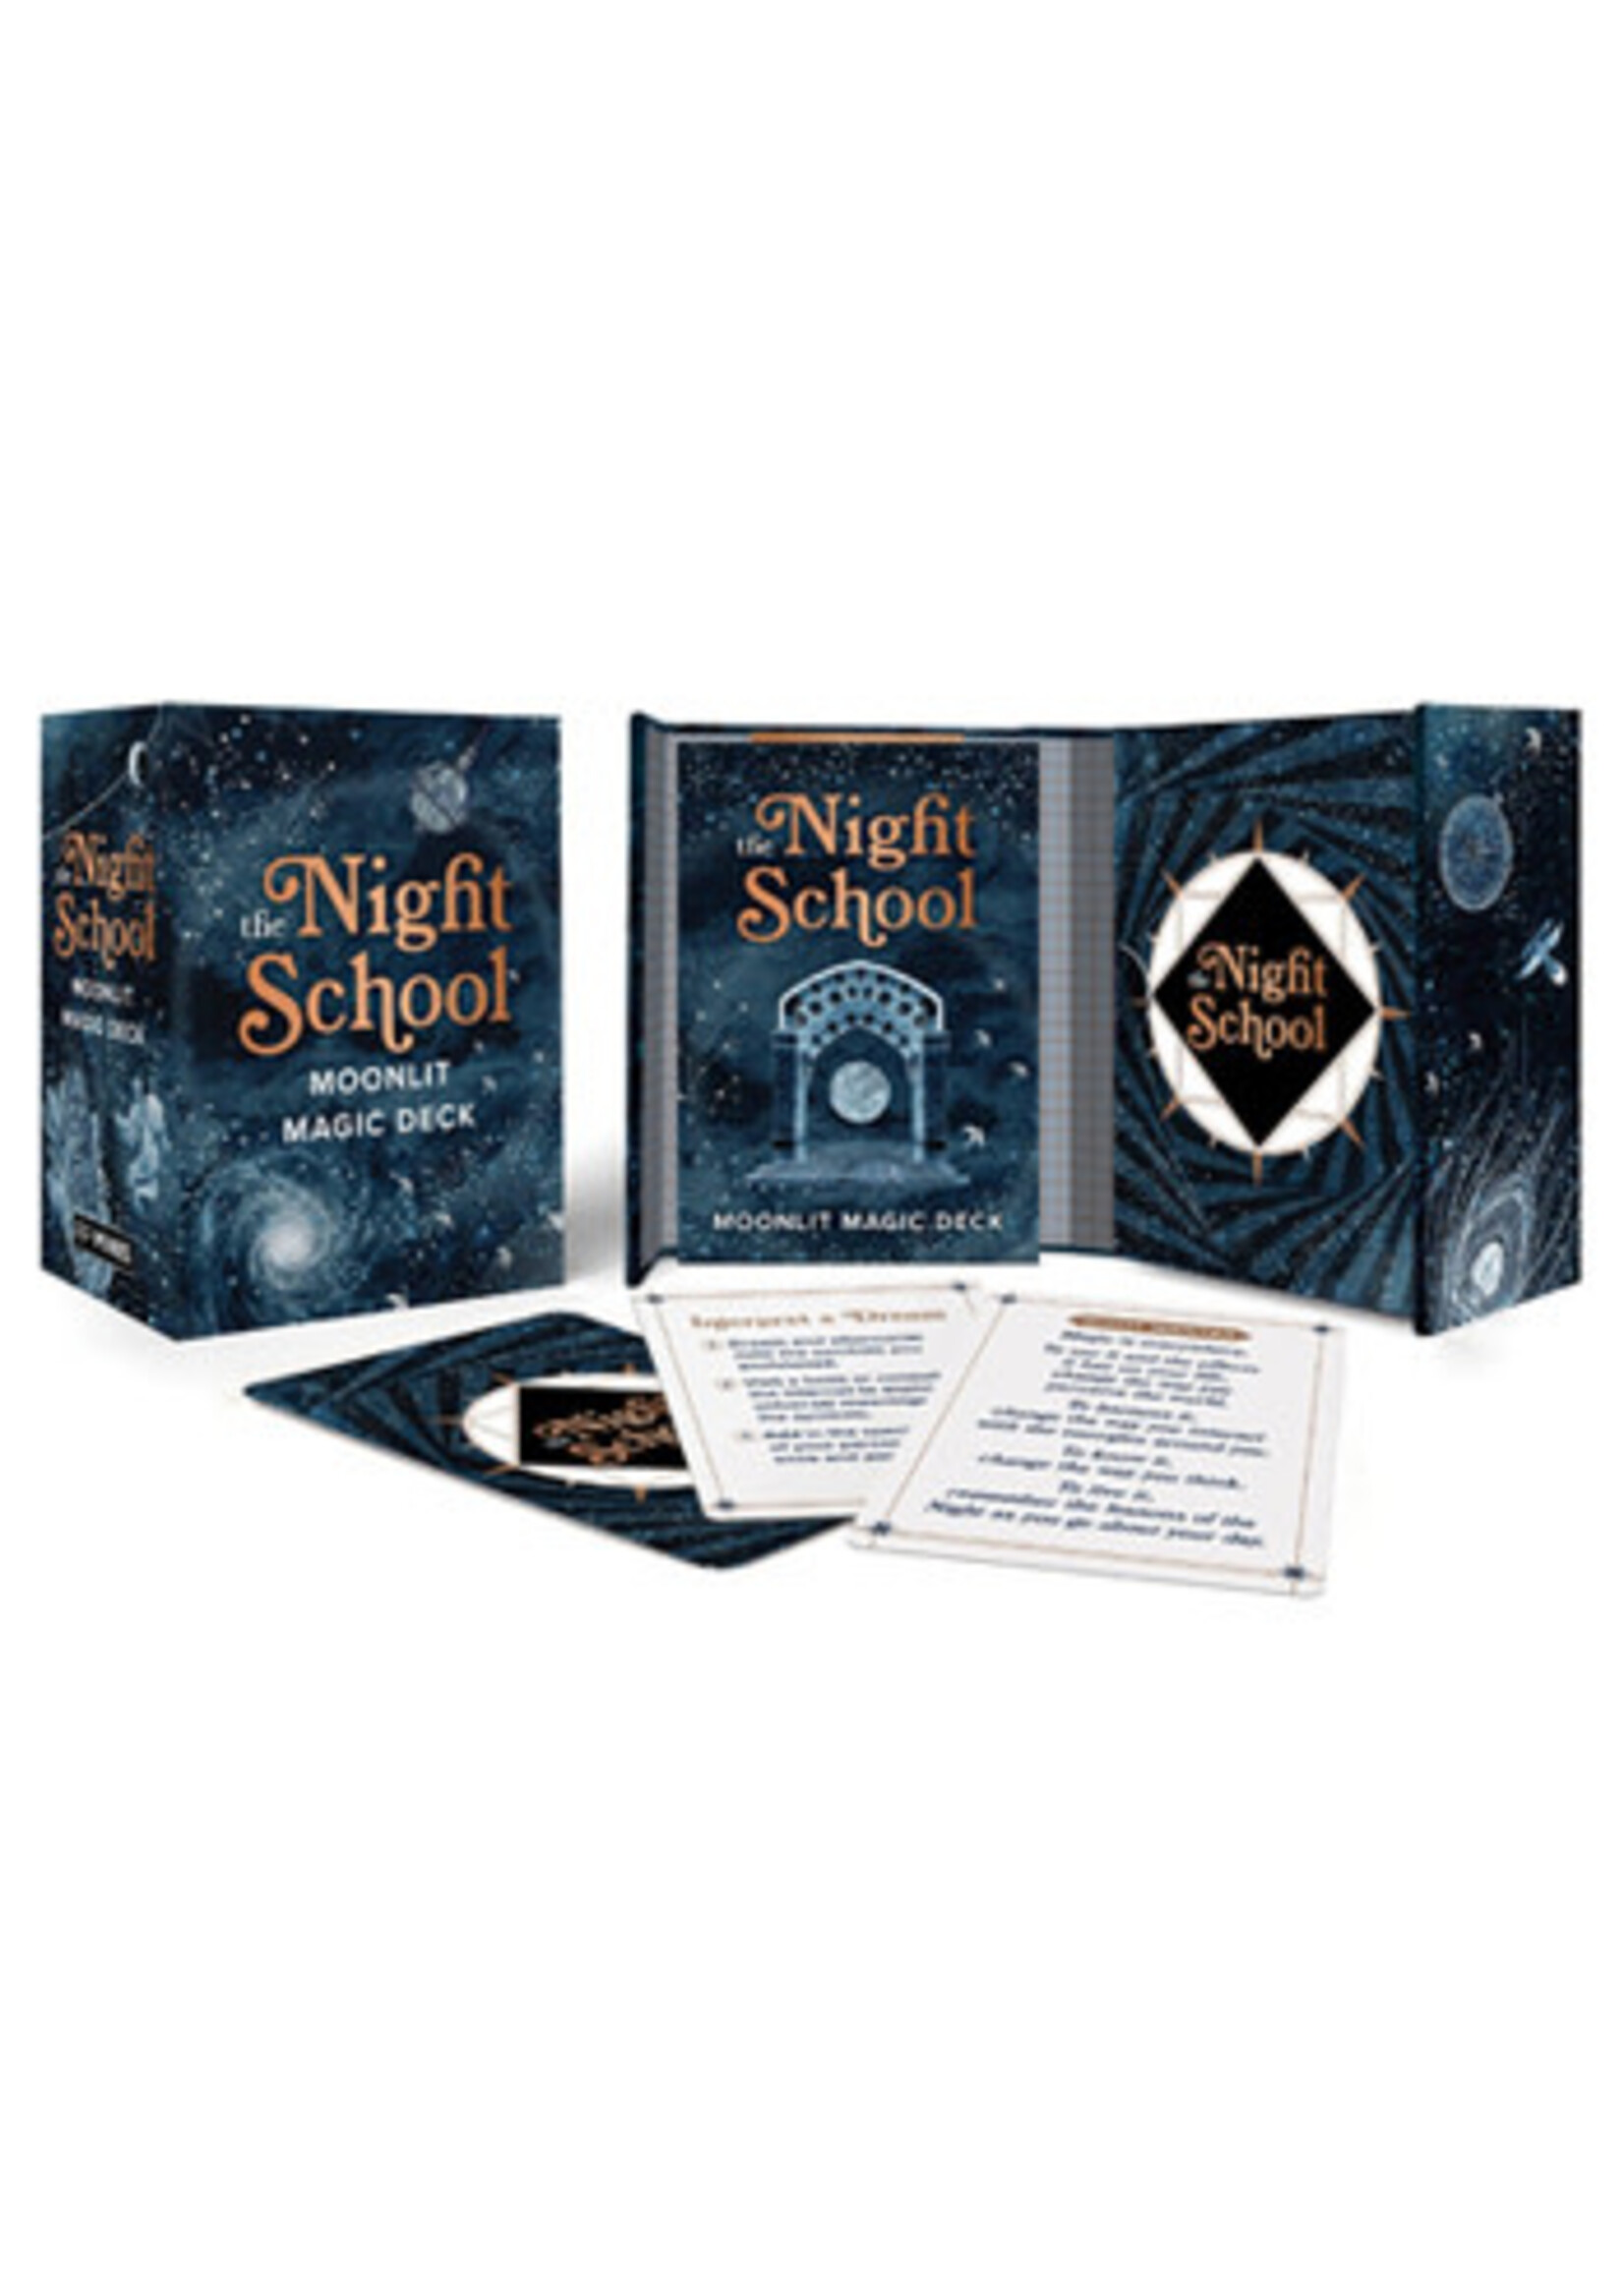 Night School Moonlit Magic Deck